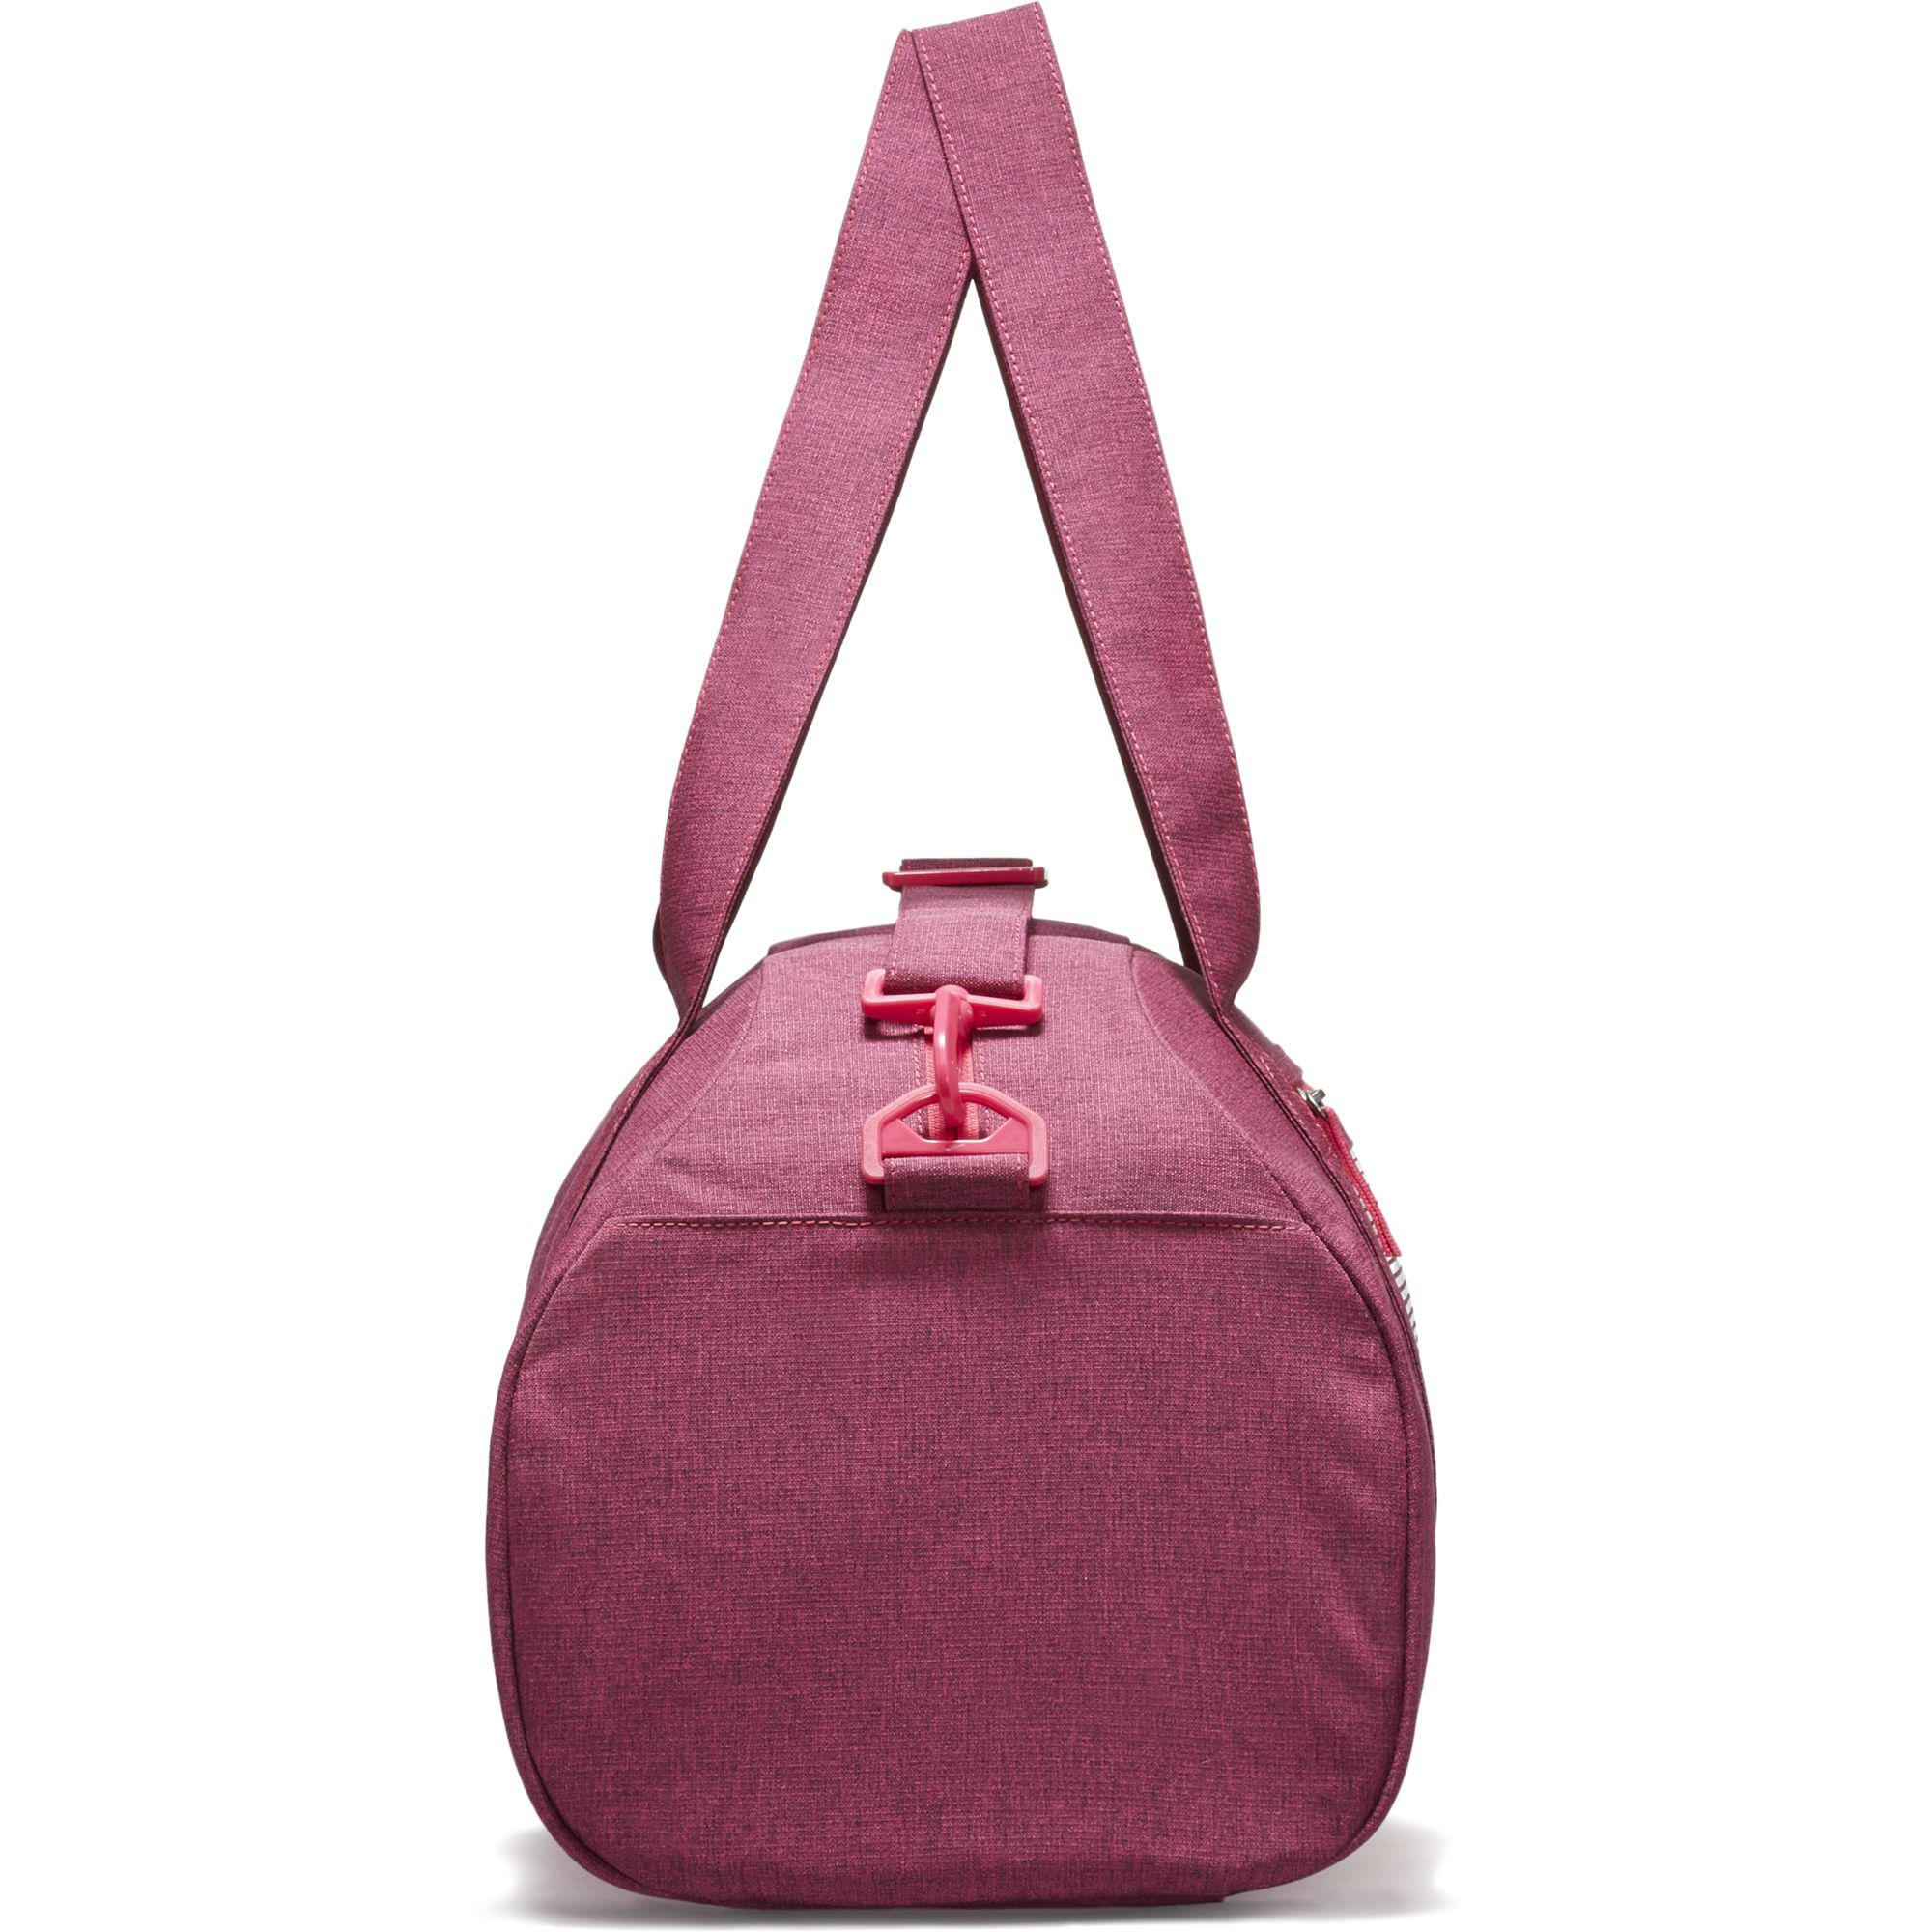 Nike Womens Duffle Training Bag - Rush Pink/White - www.bagsaleusa.com/product-category/classic-bags/